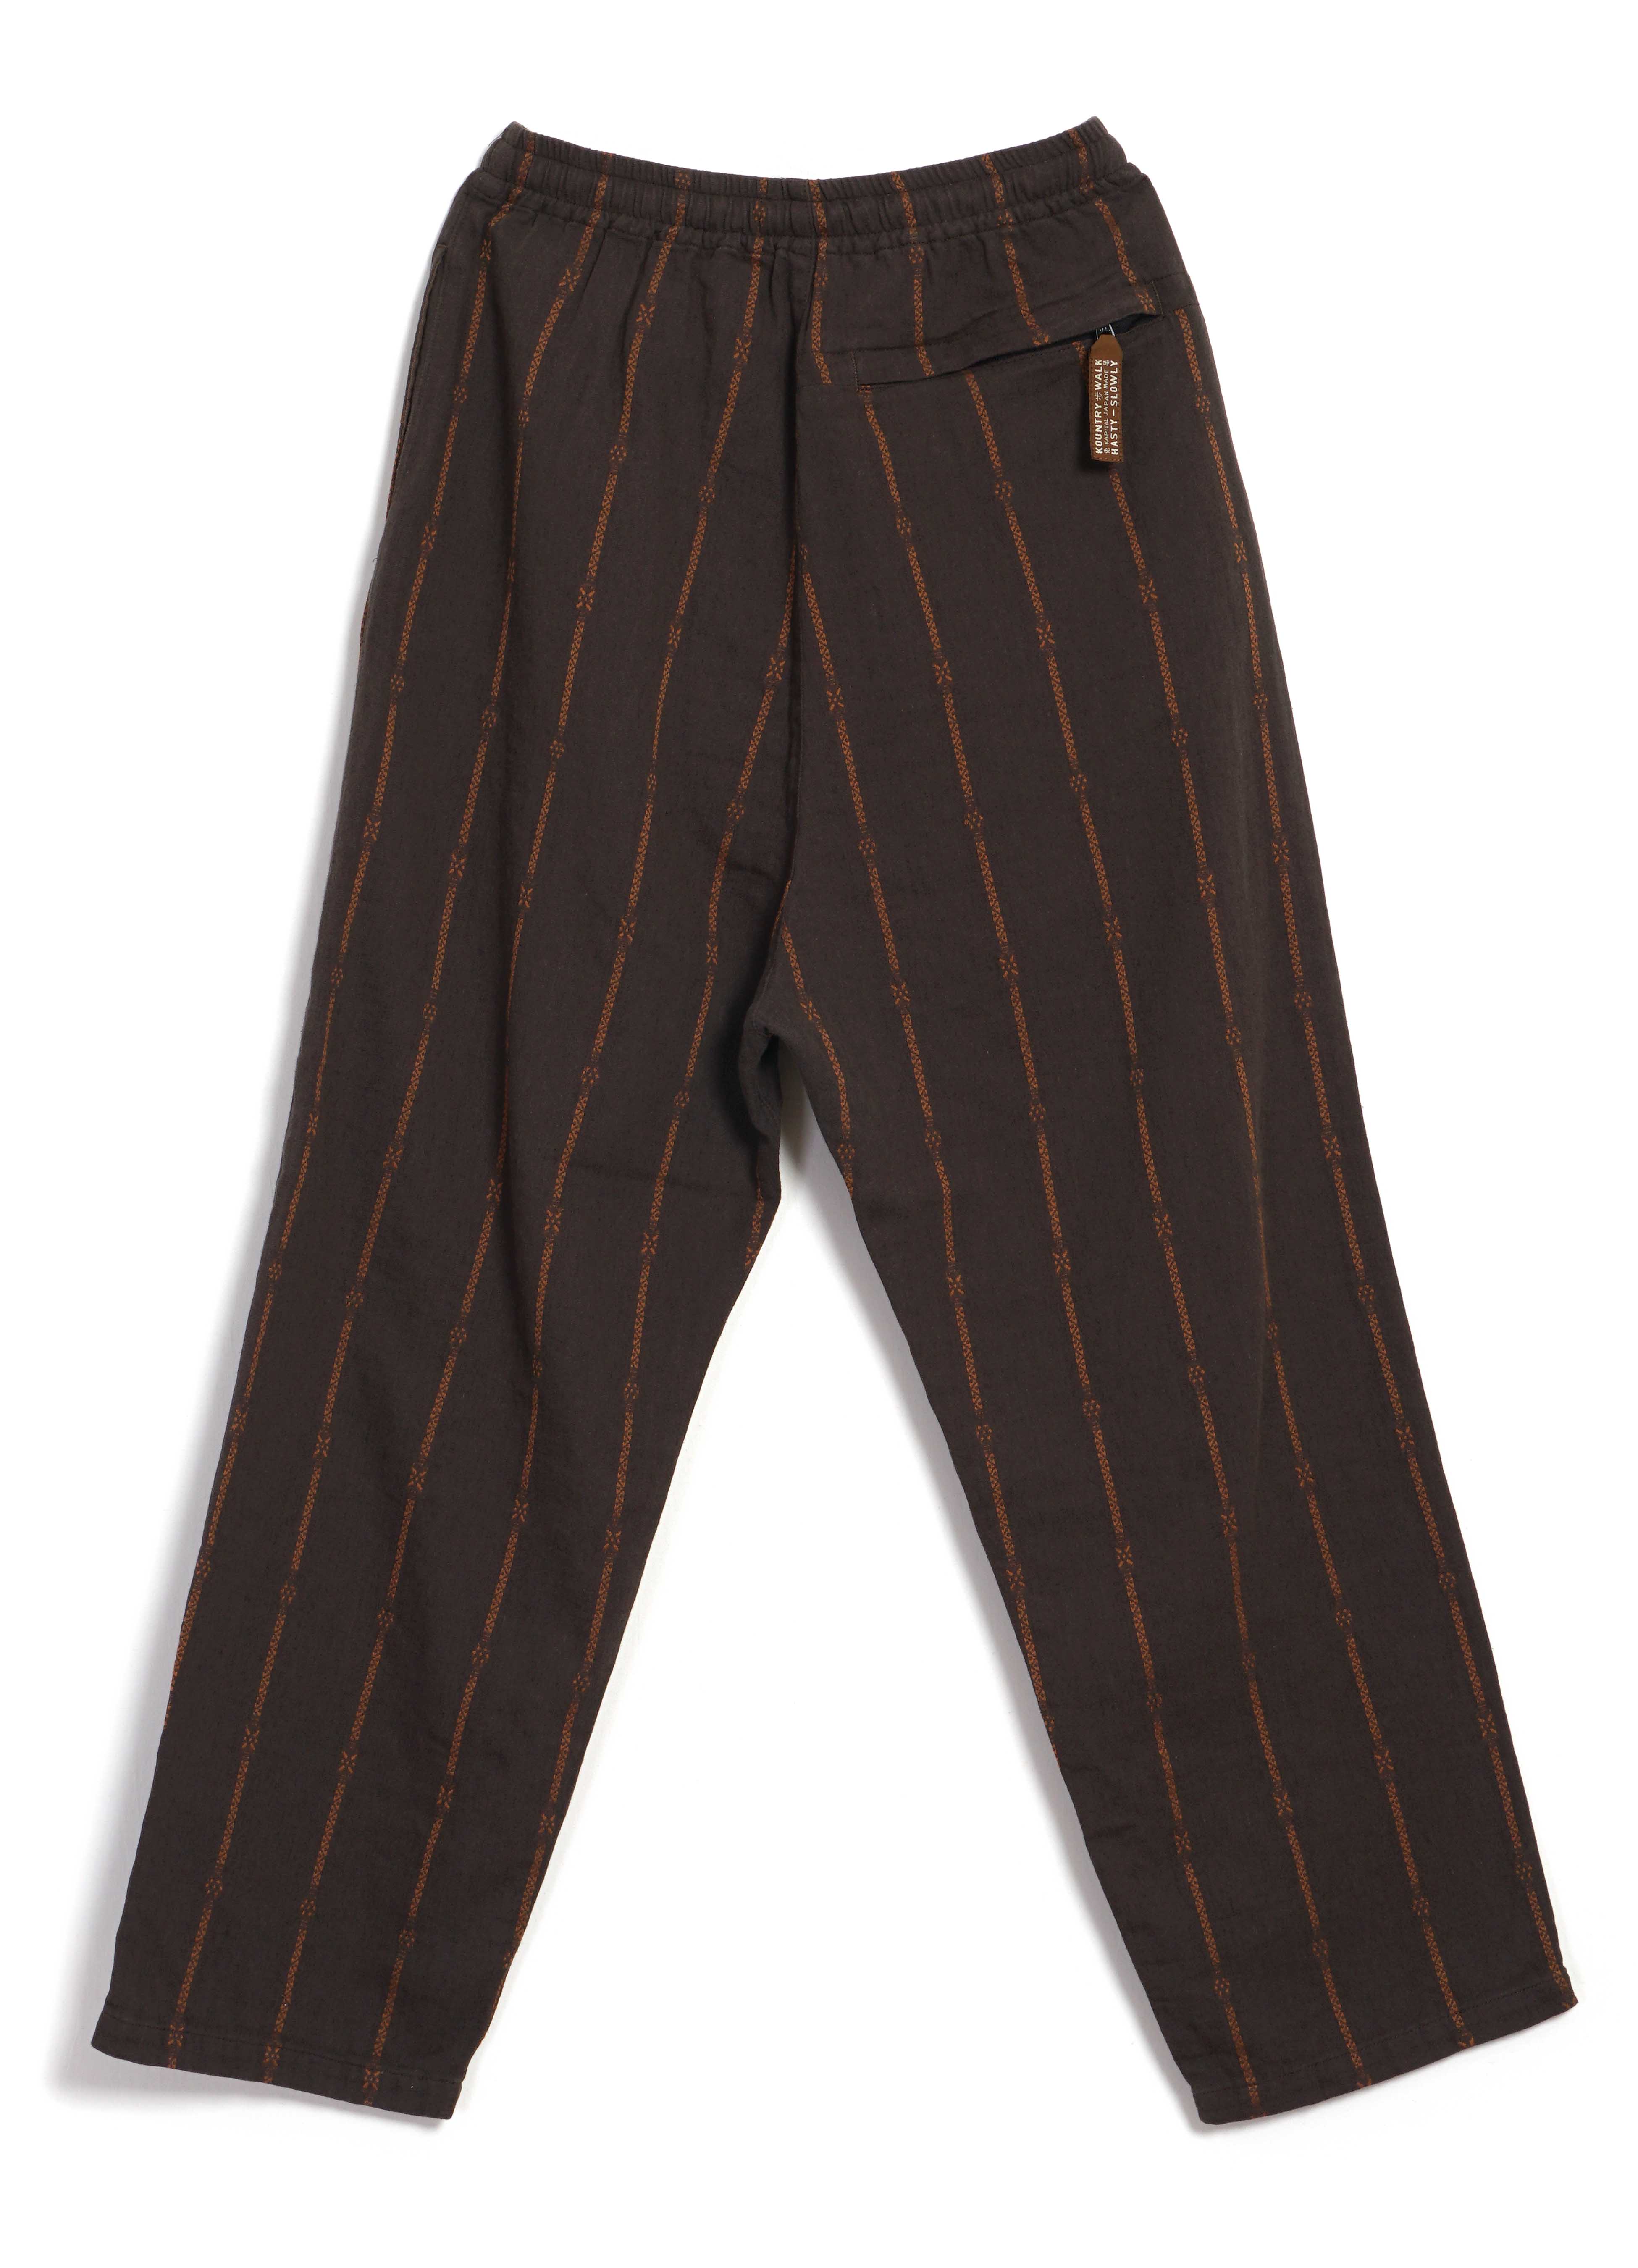 SIAM | Striped Cotton Linen Pants | Dark Brown